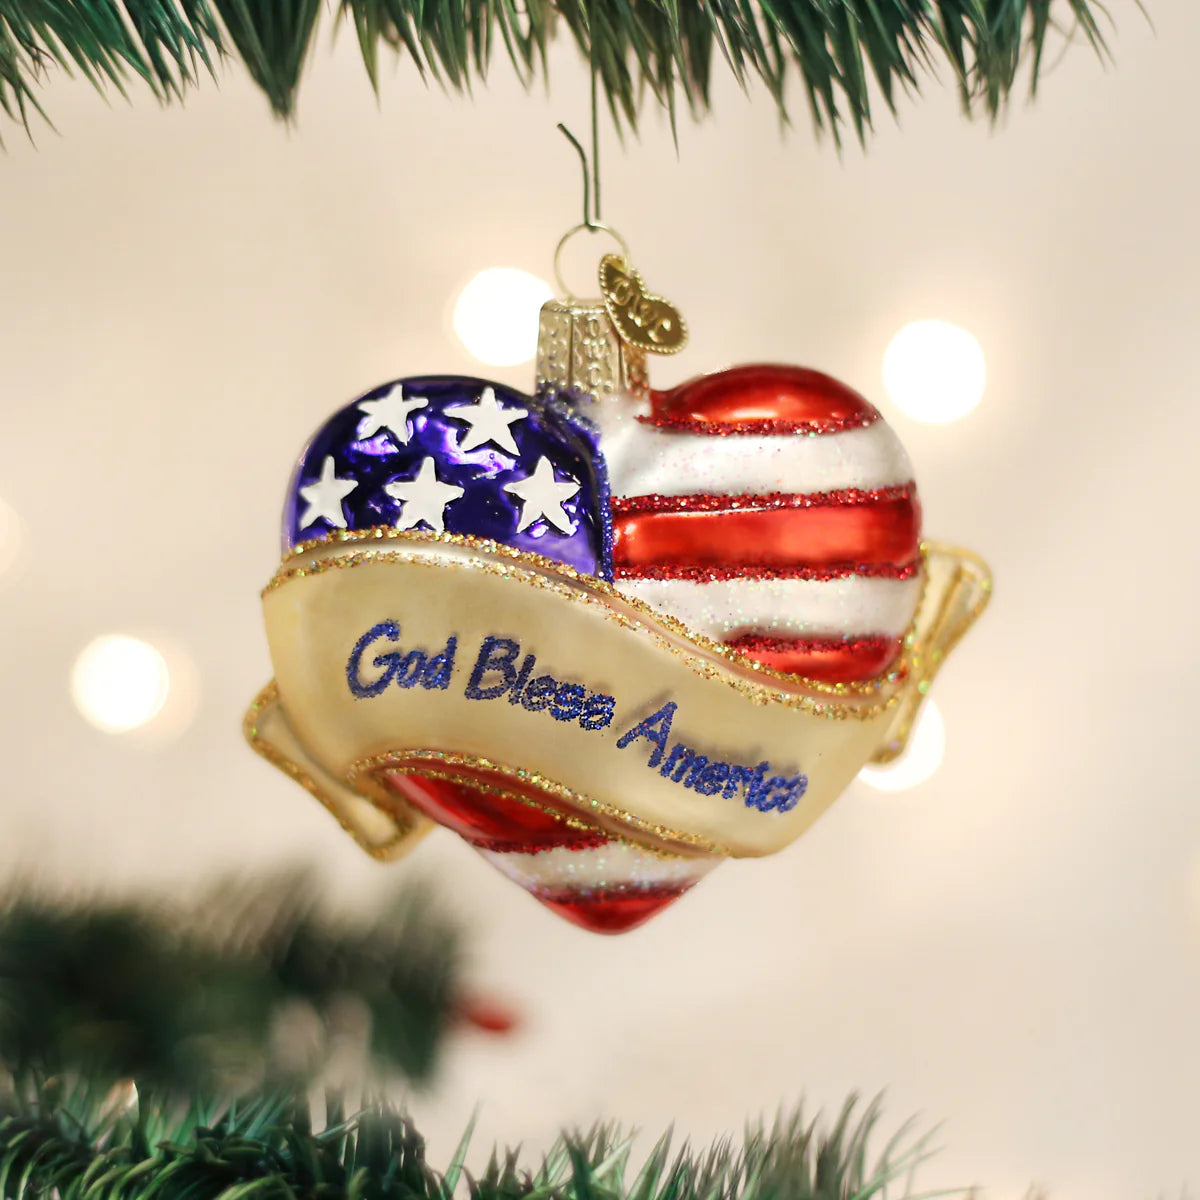 Old World Christmas - God Bless America Heart Ornament